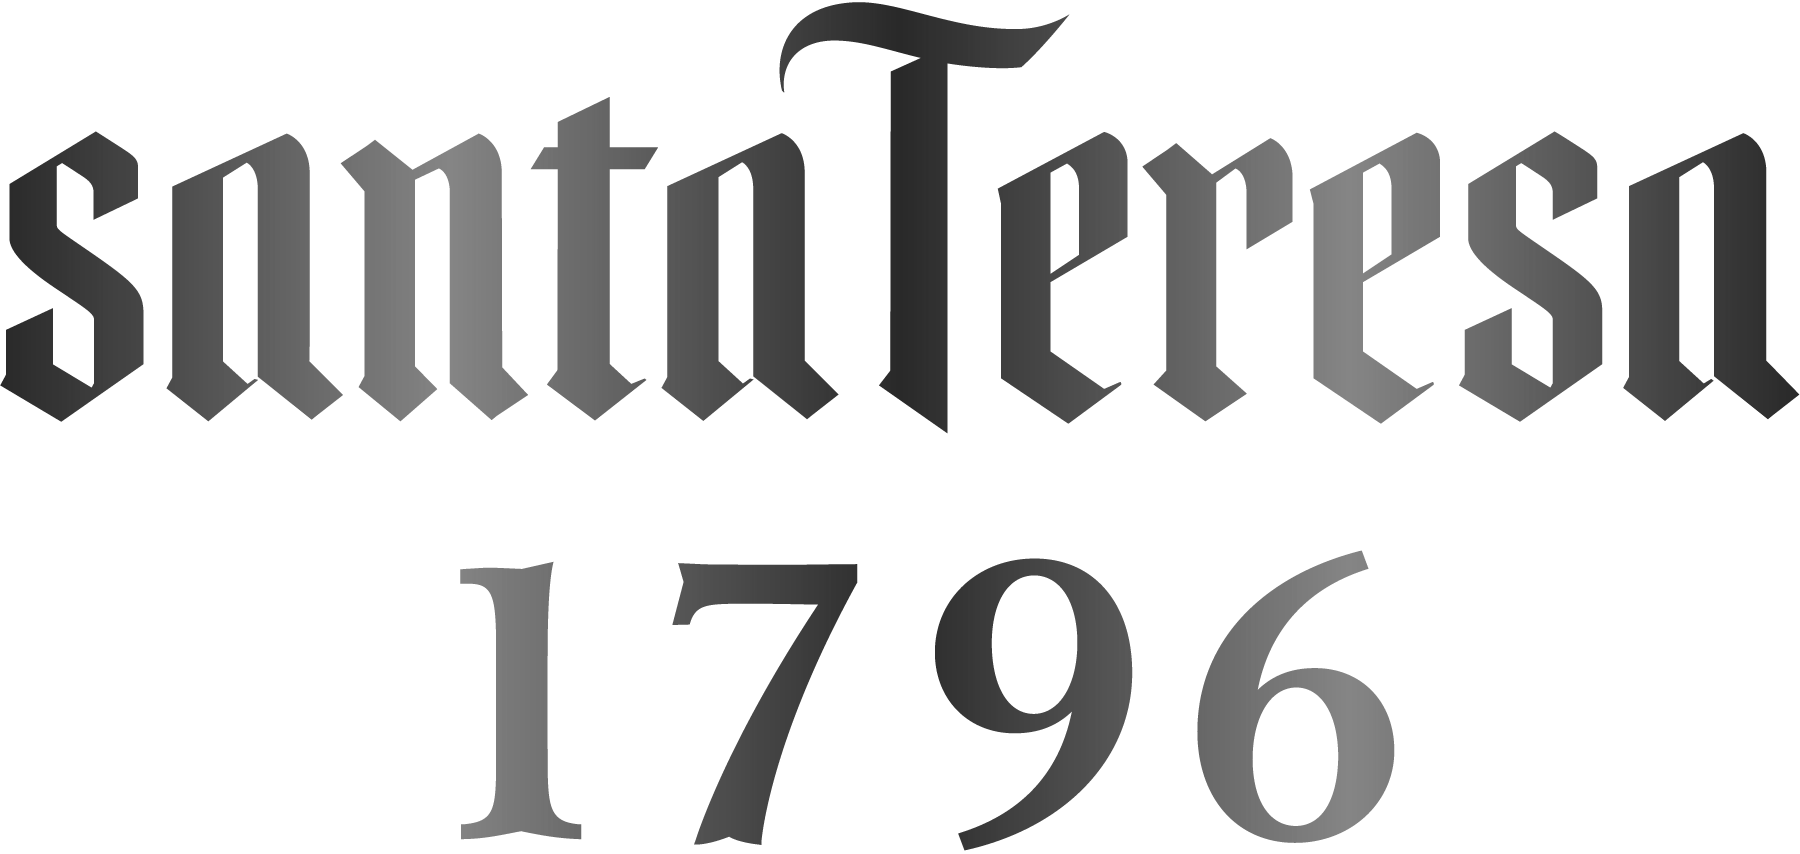 Logo - Santa Teresa 1976